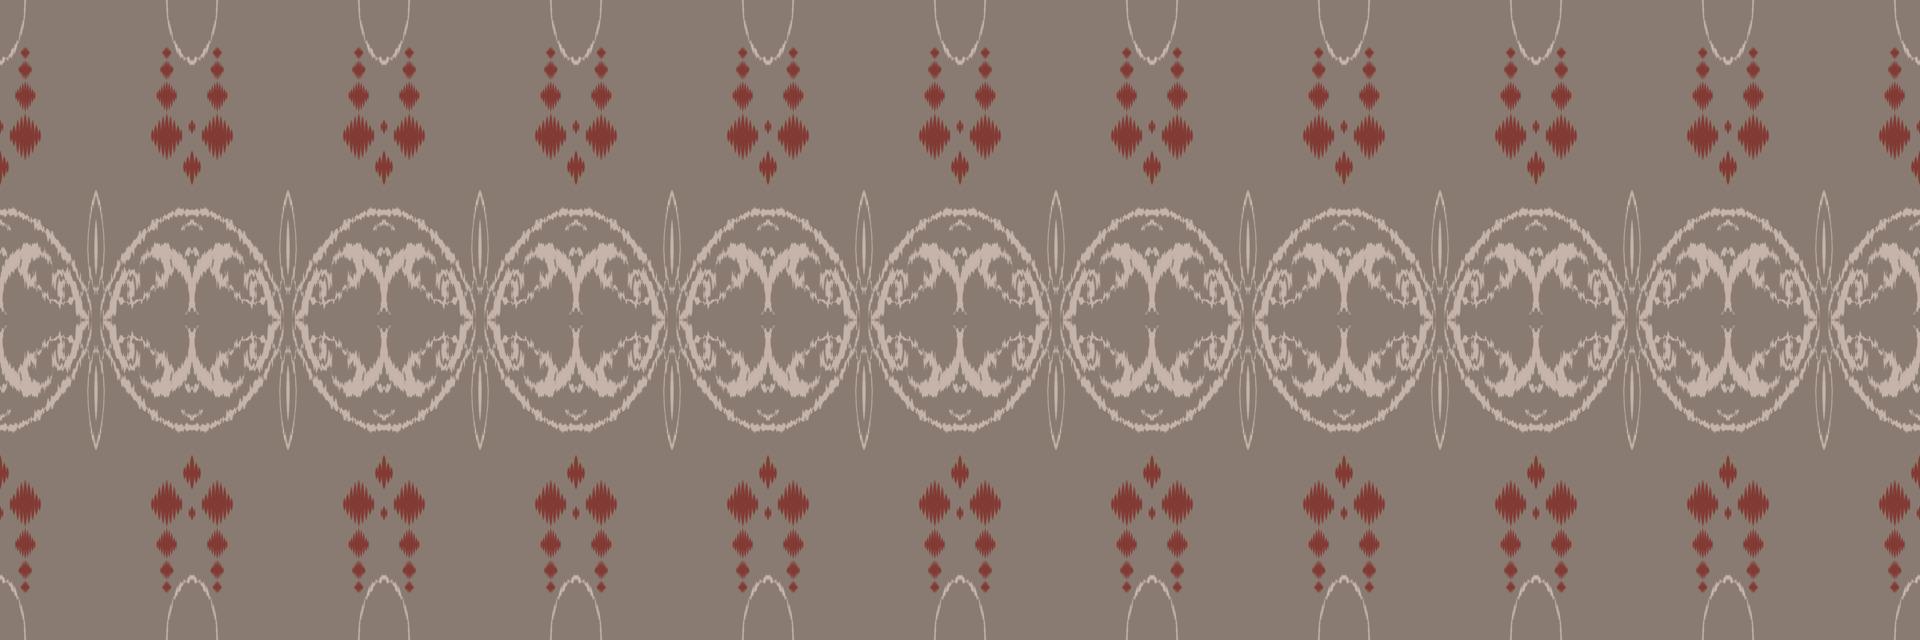 Batik Textile Filipino ikat seamless pattern digital vector design for Print saree Kurti Borneo Fabric border brush symbols swatches party wear